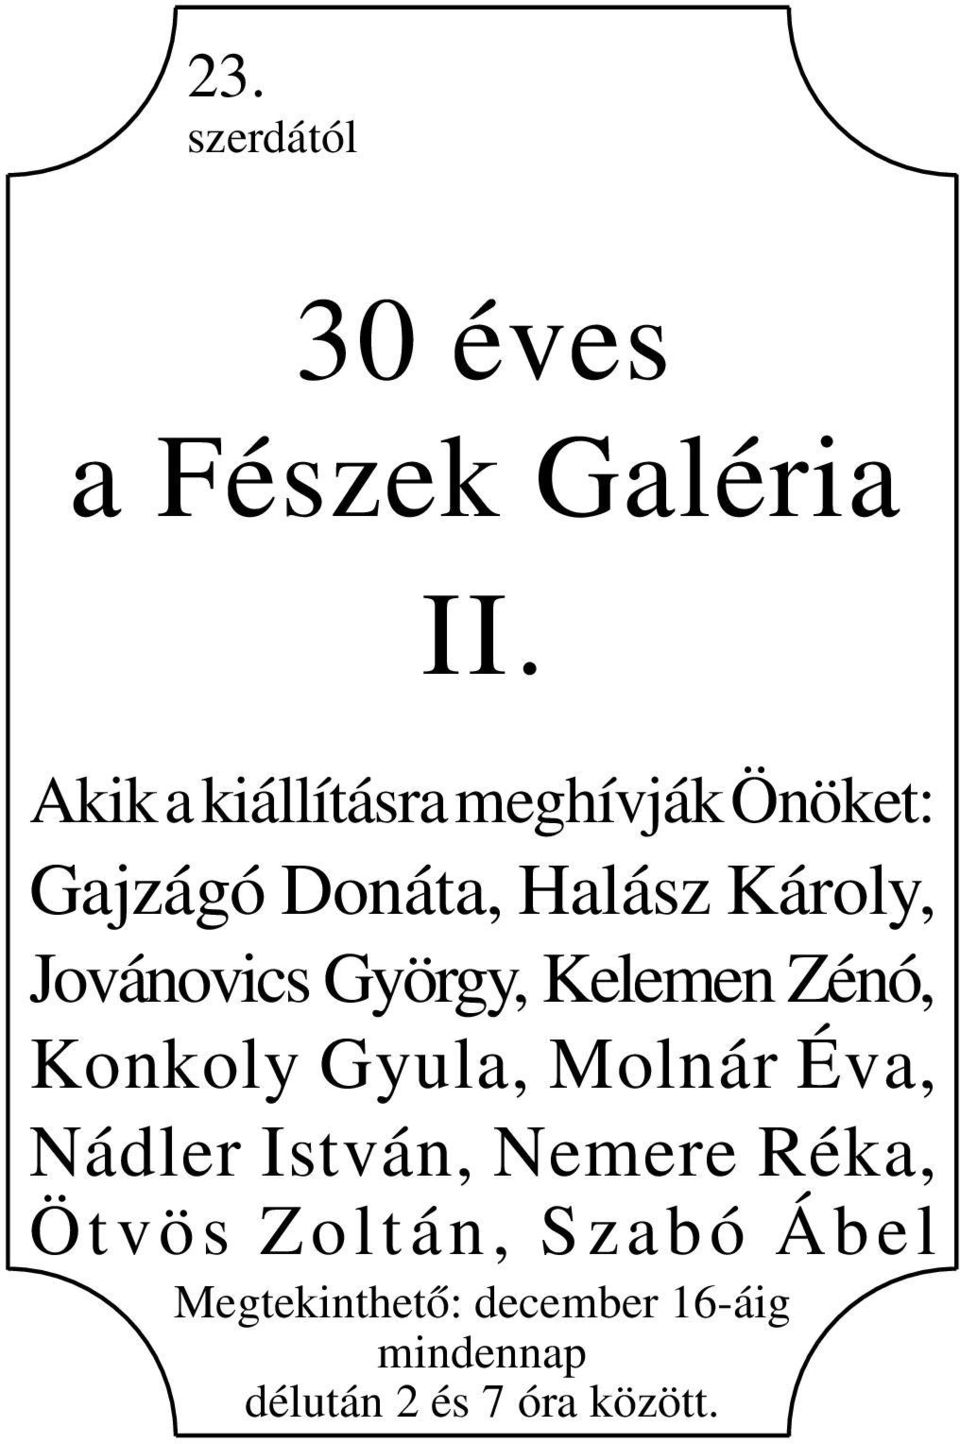 Jovánovics György, Kelemen Zénó, Konkoly Gyula, Molnár Éva, Nádler